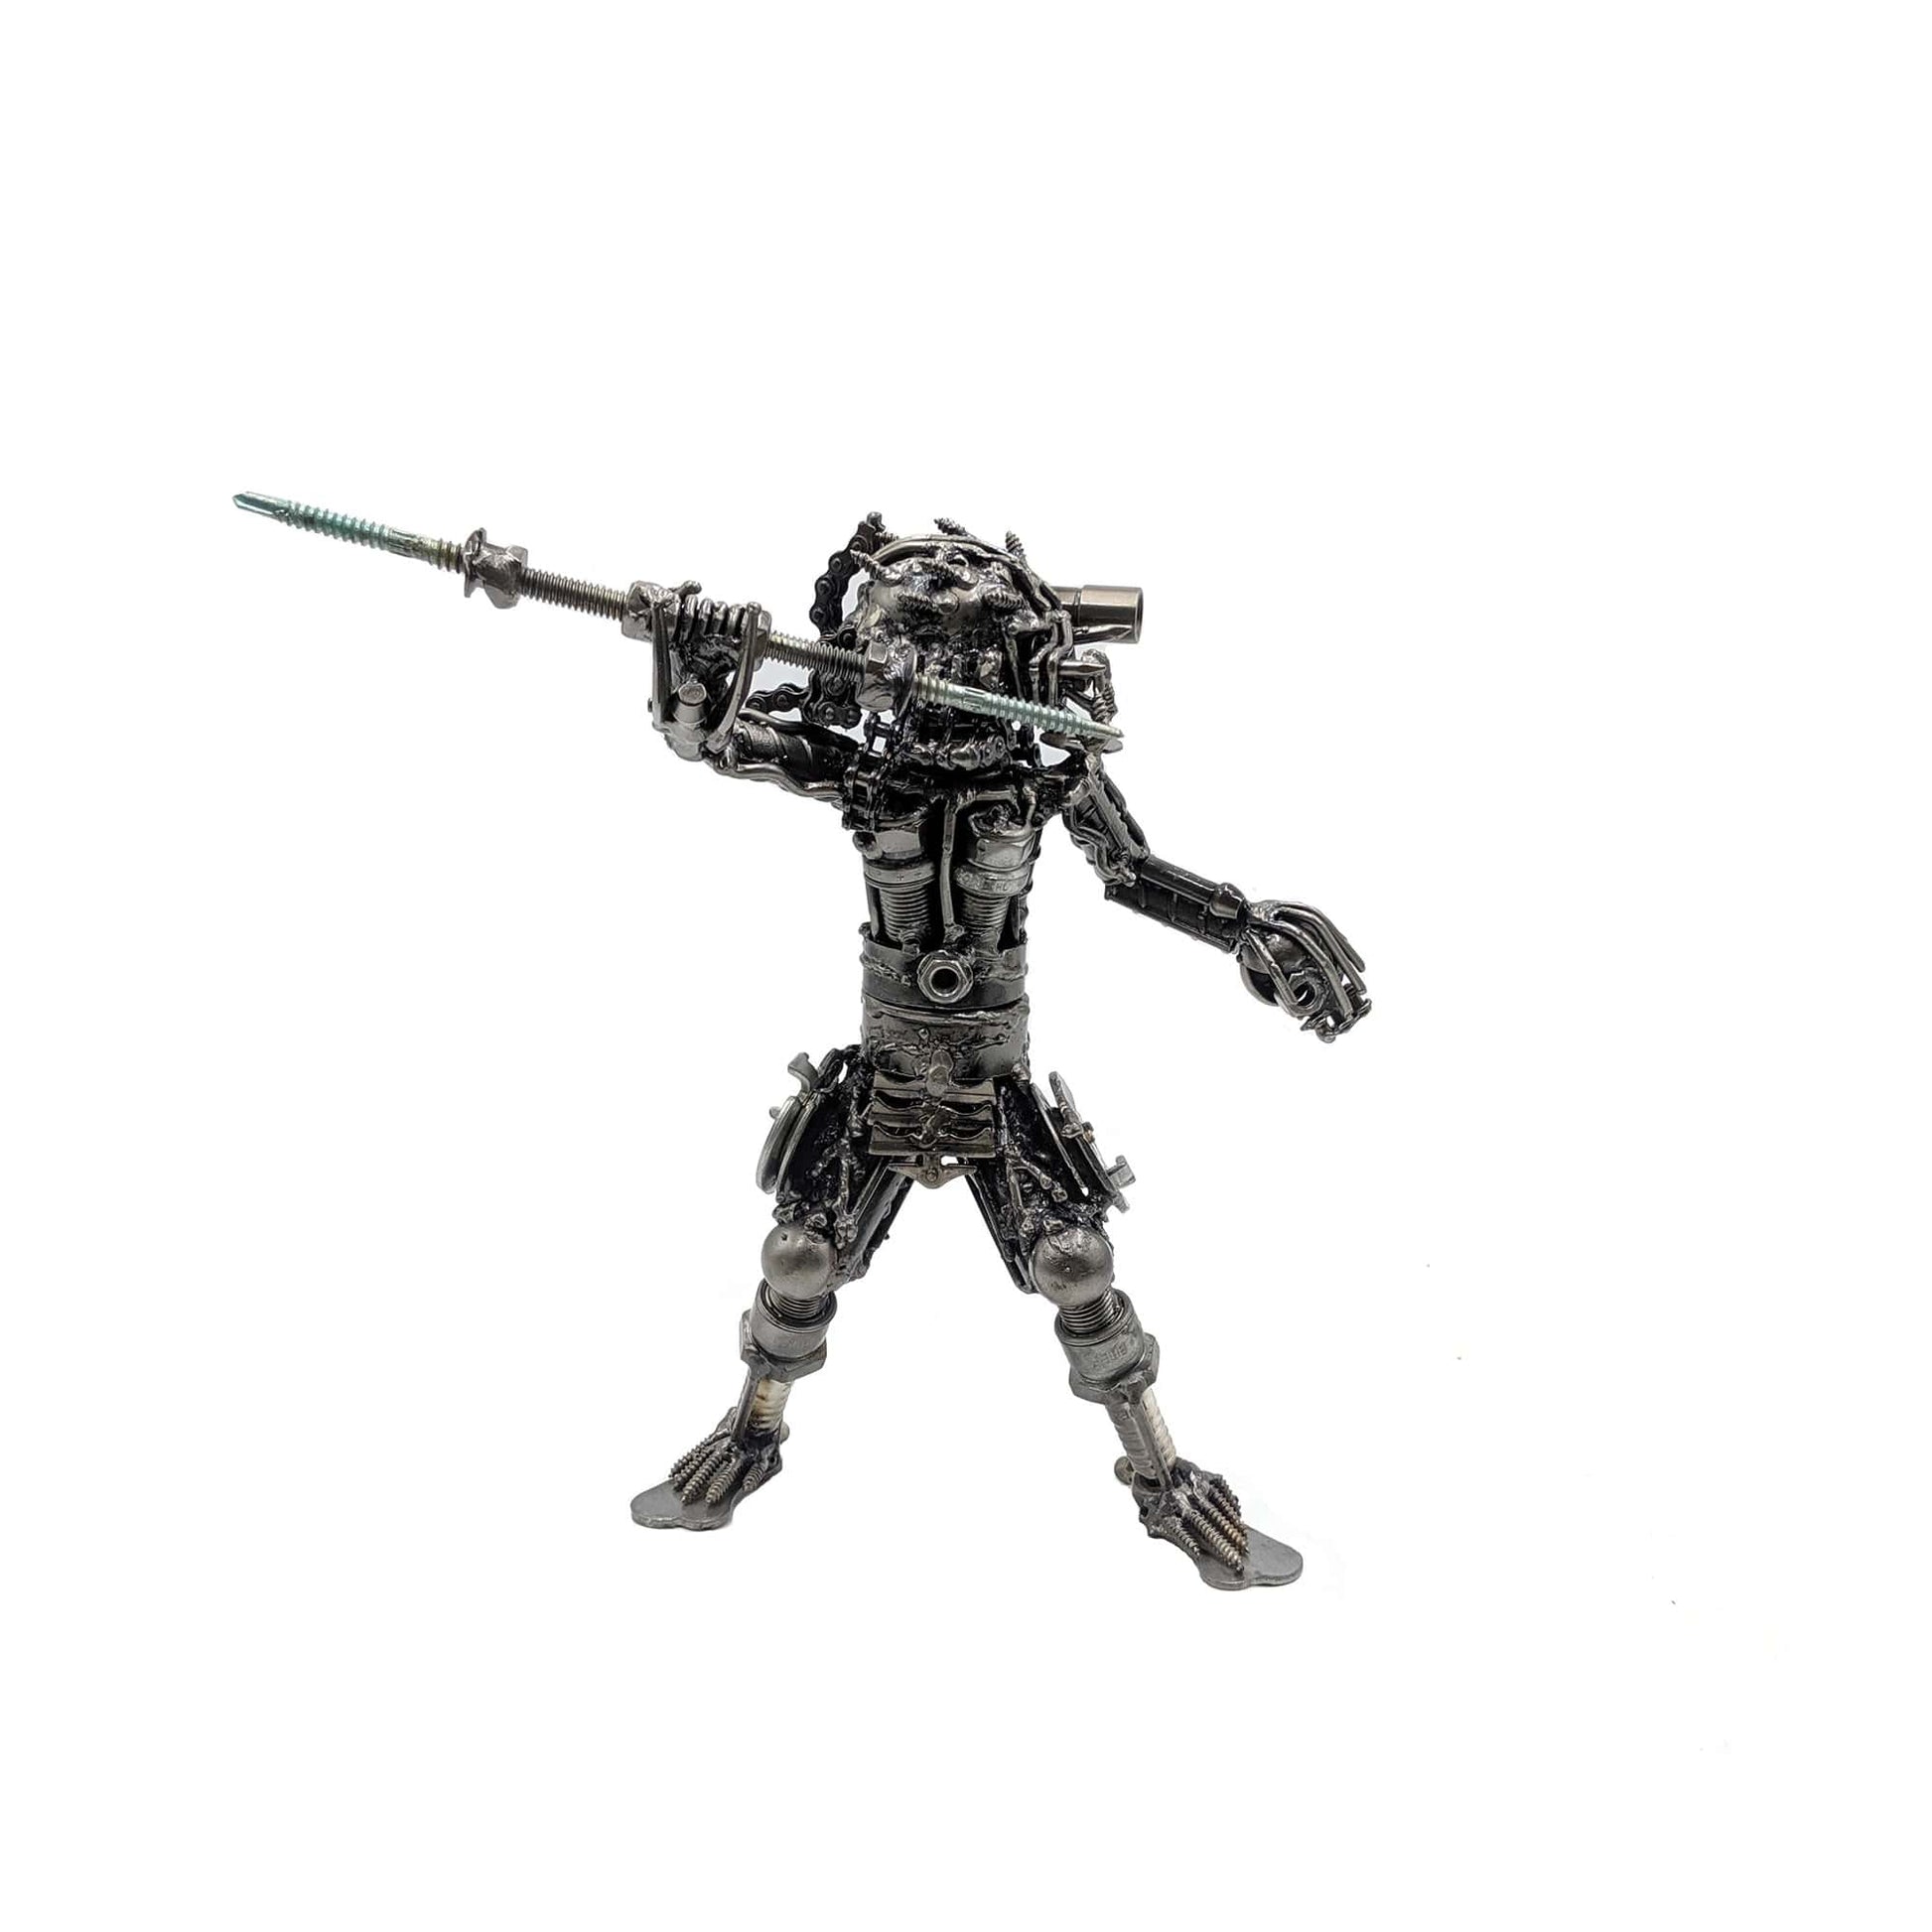 Predator Miniature Metal Art Figurine